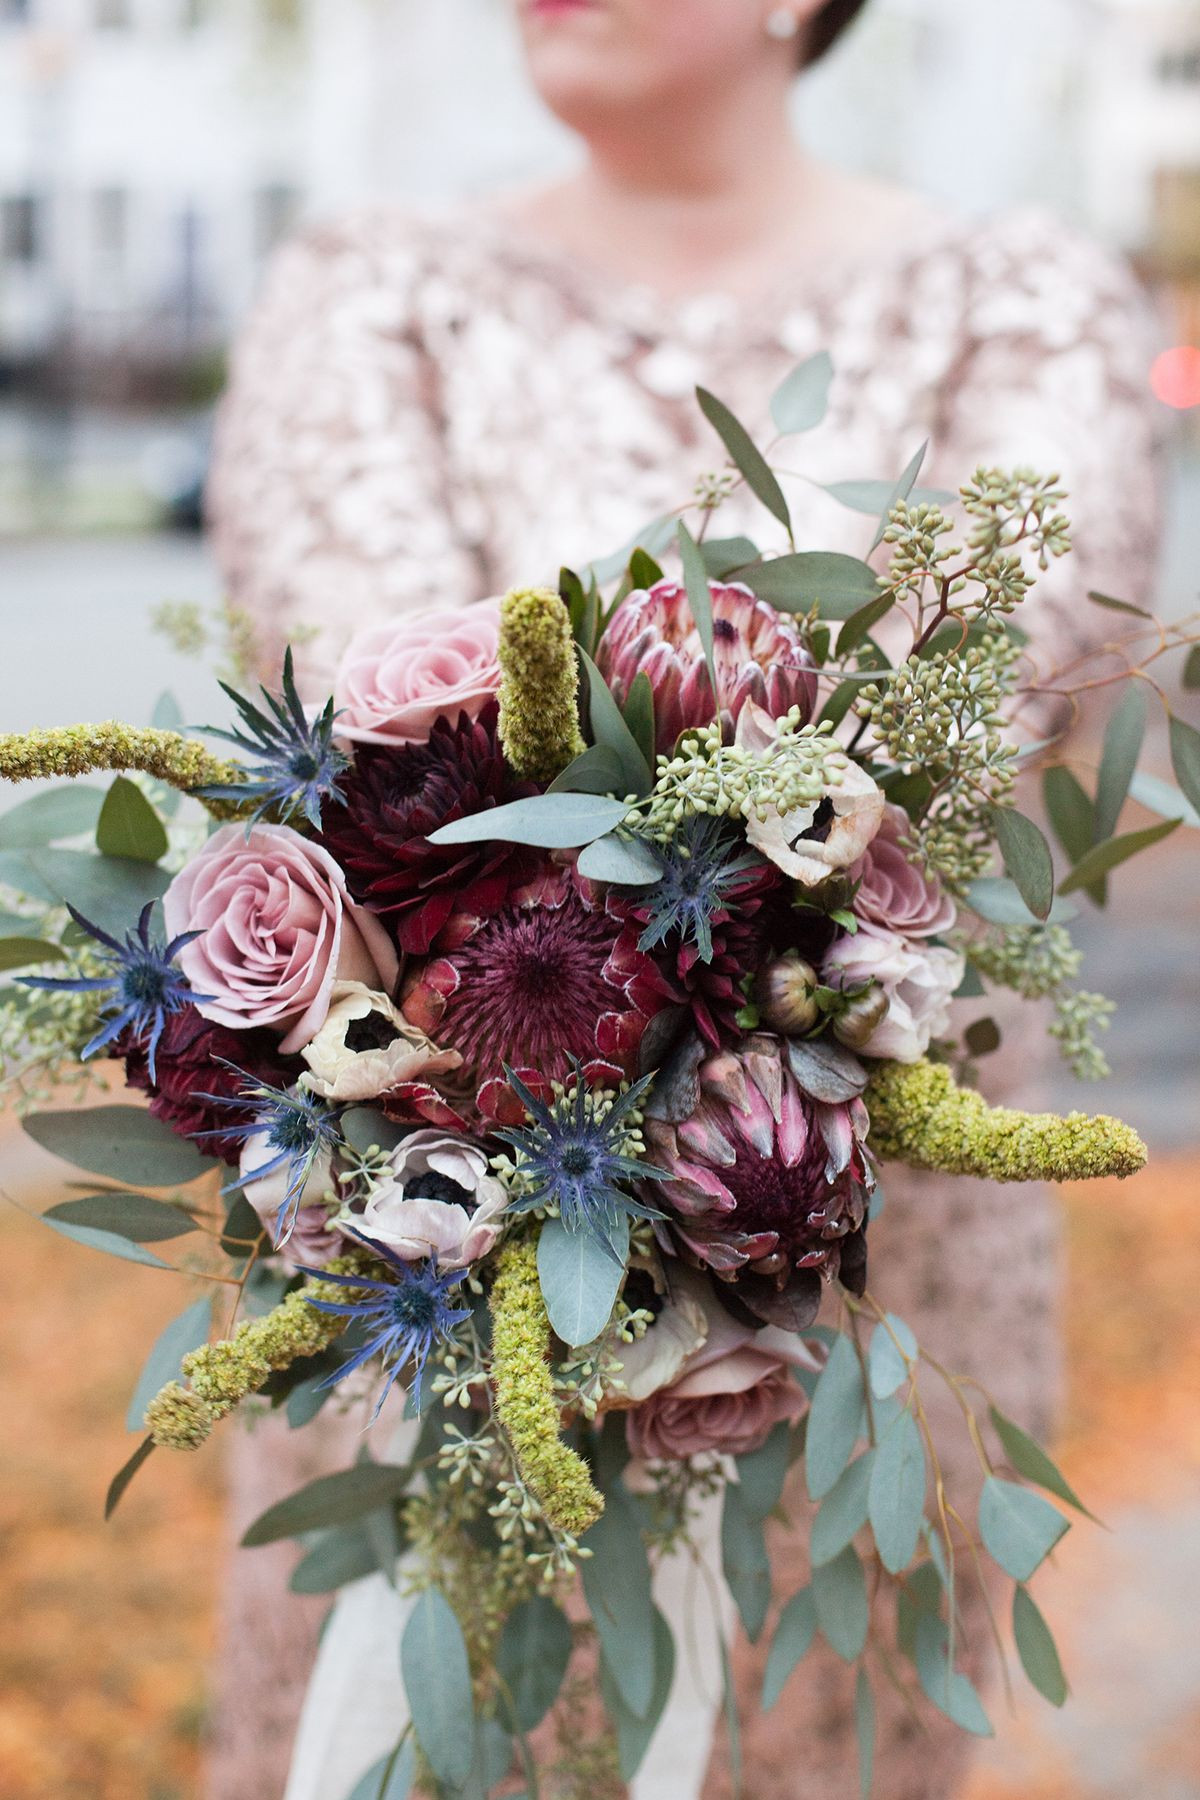 DIY Fall Wedding Bouquet
 DIY fall inspired king protea wedding bouquet from